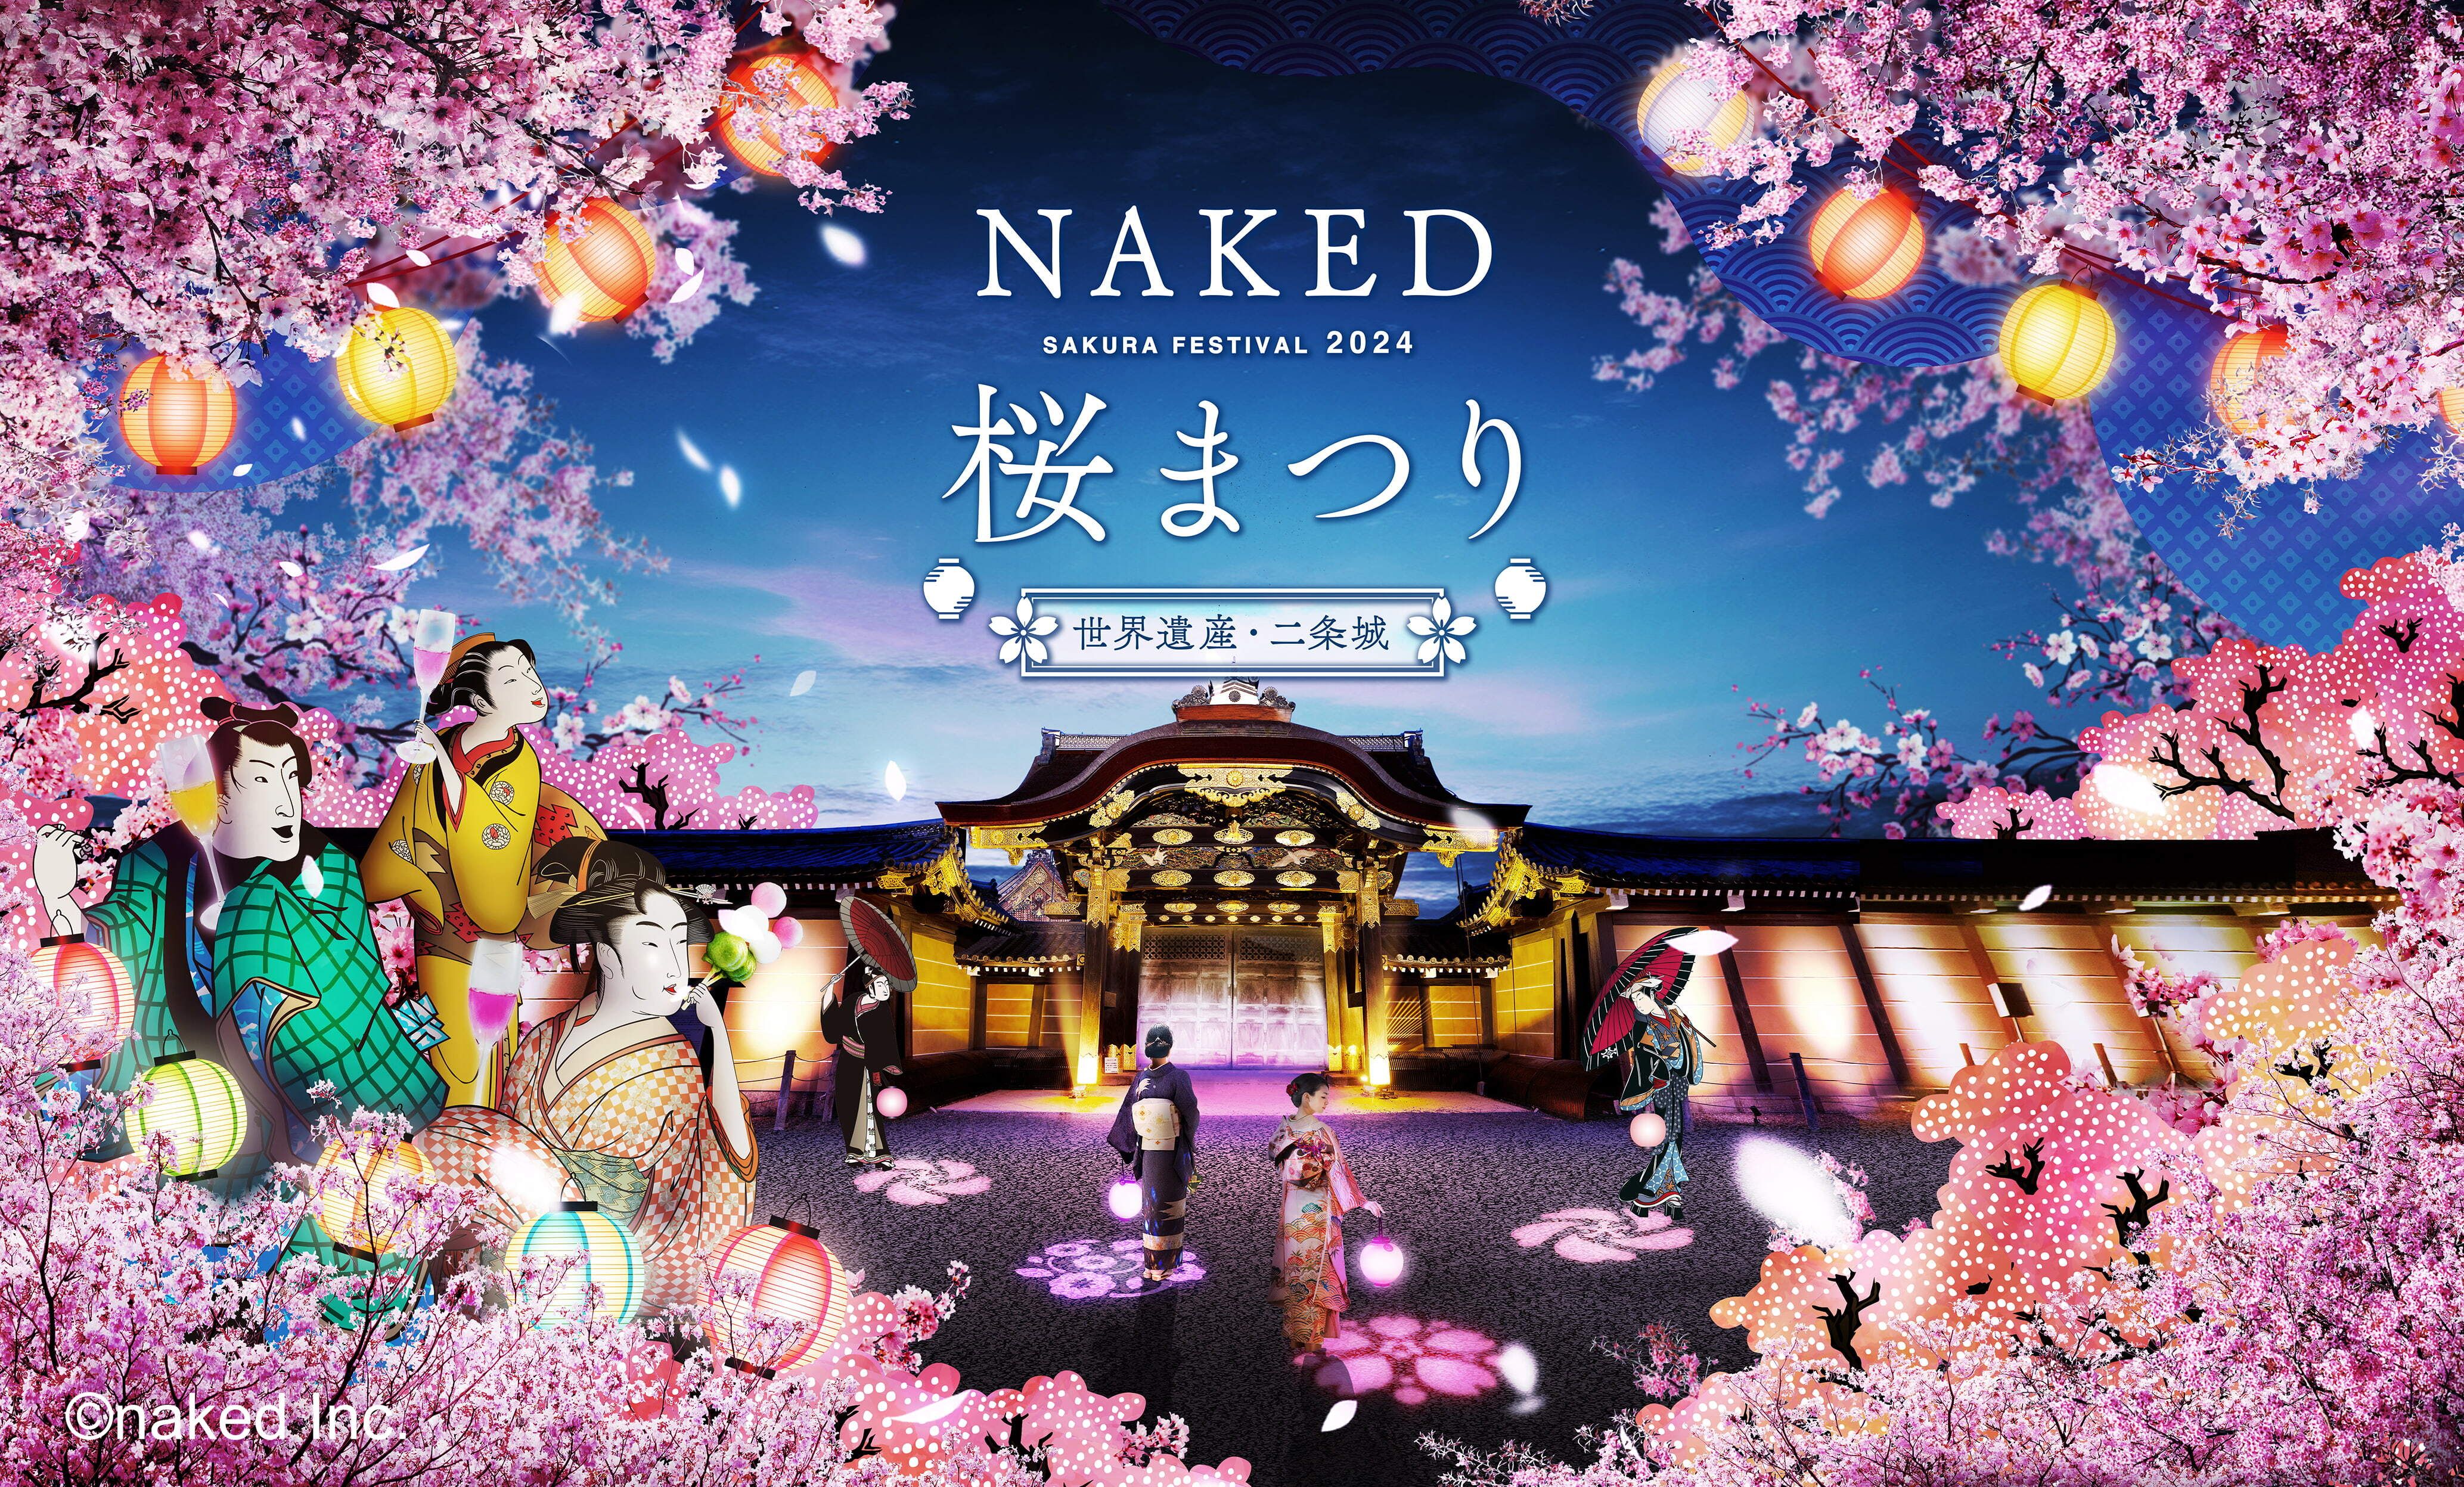 Naked Flowers Kyoto Tickets: NAKED Sakura Festival 2024 at World Heritage Nijo Castle